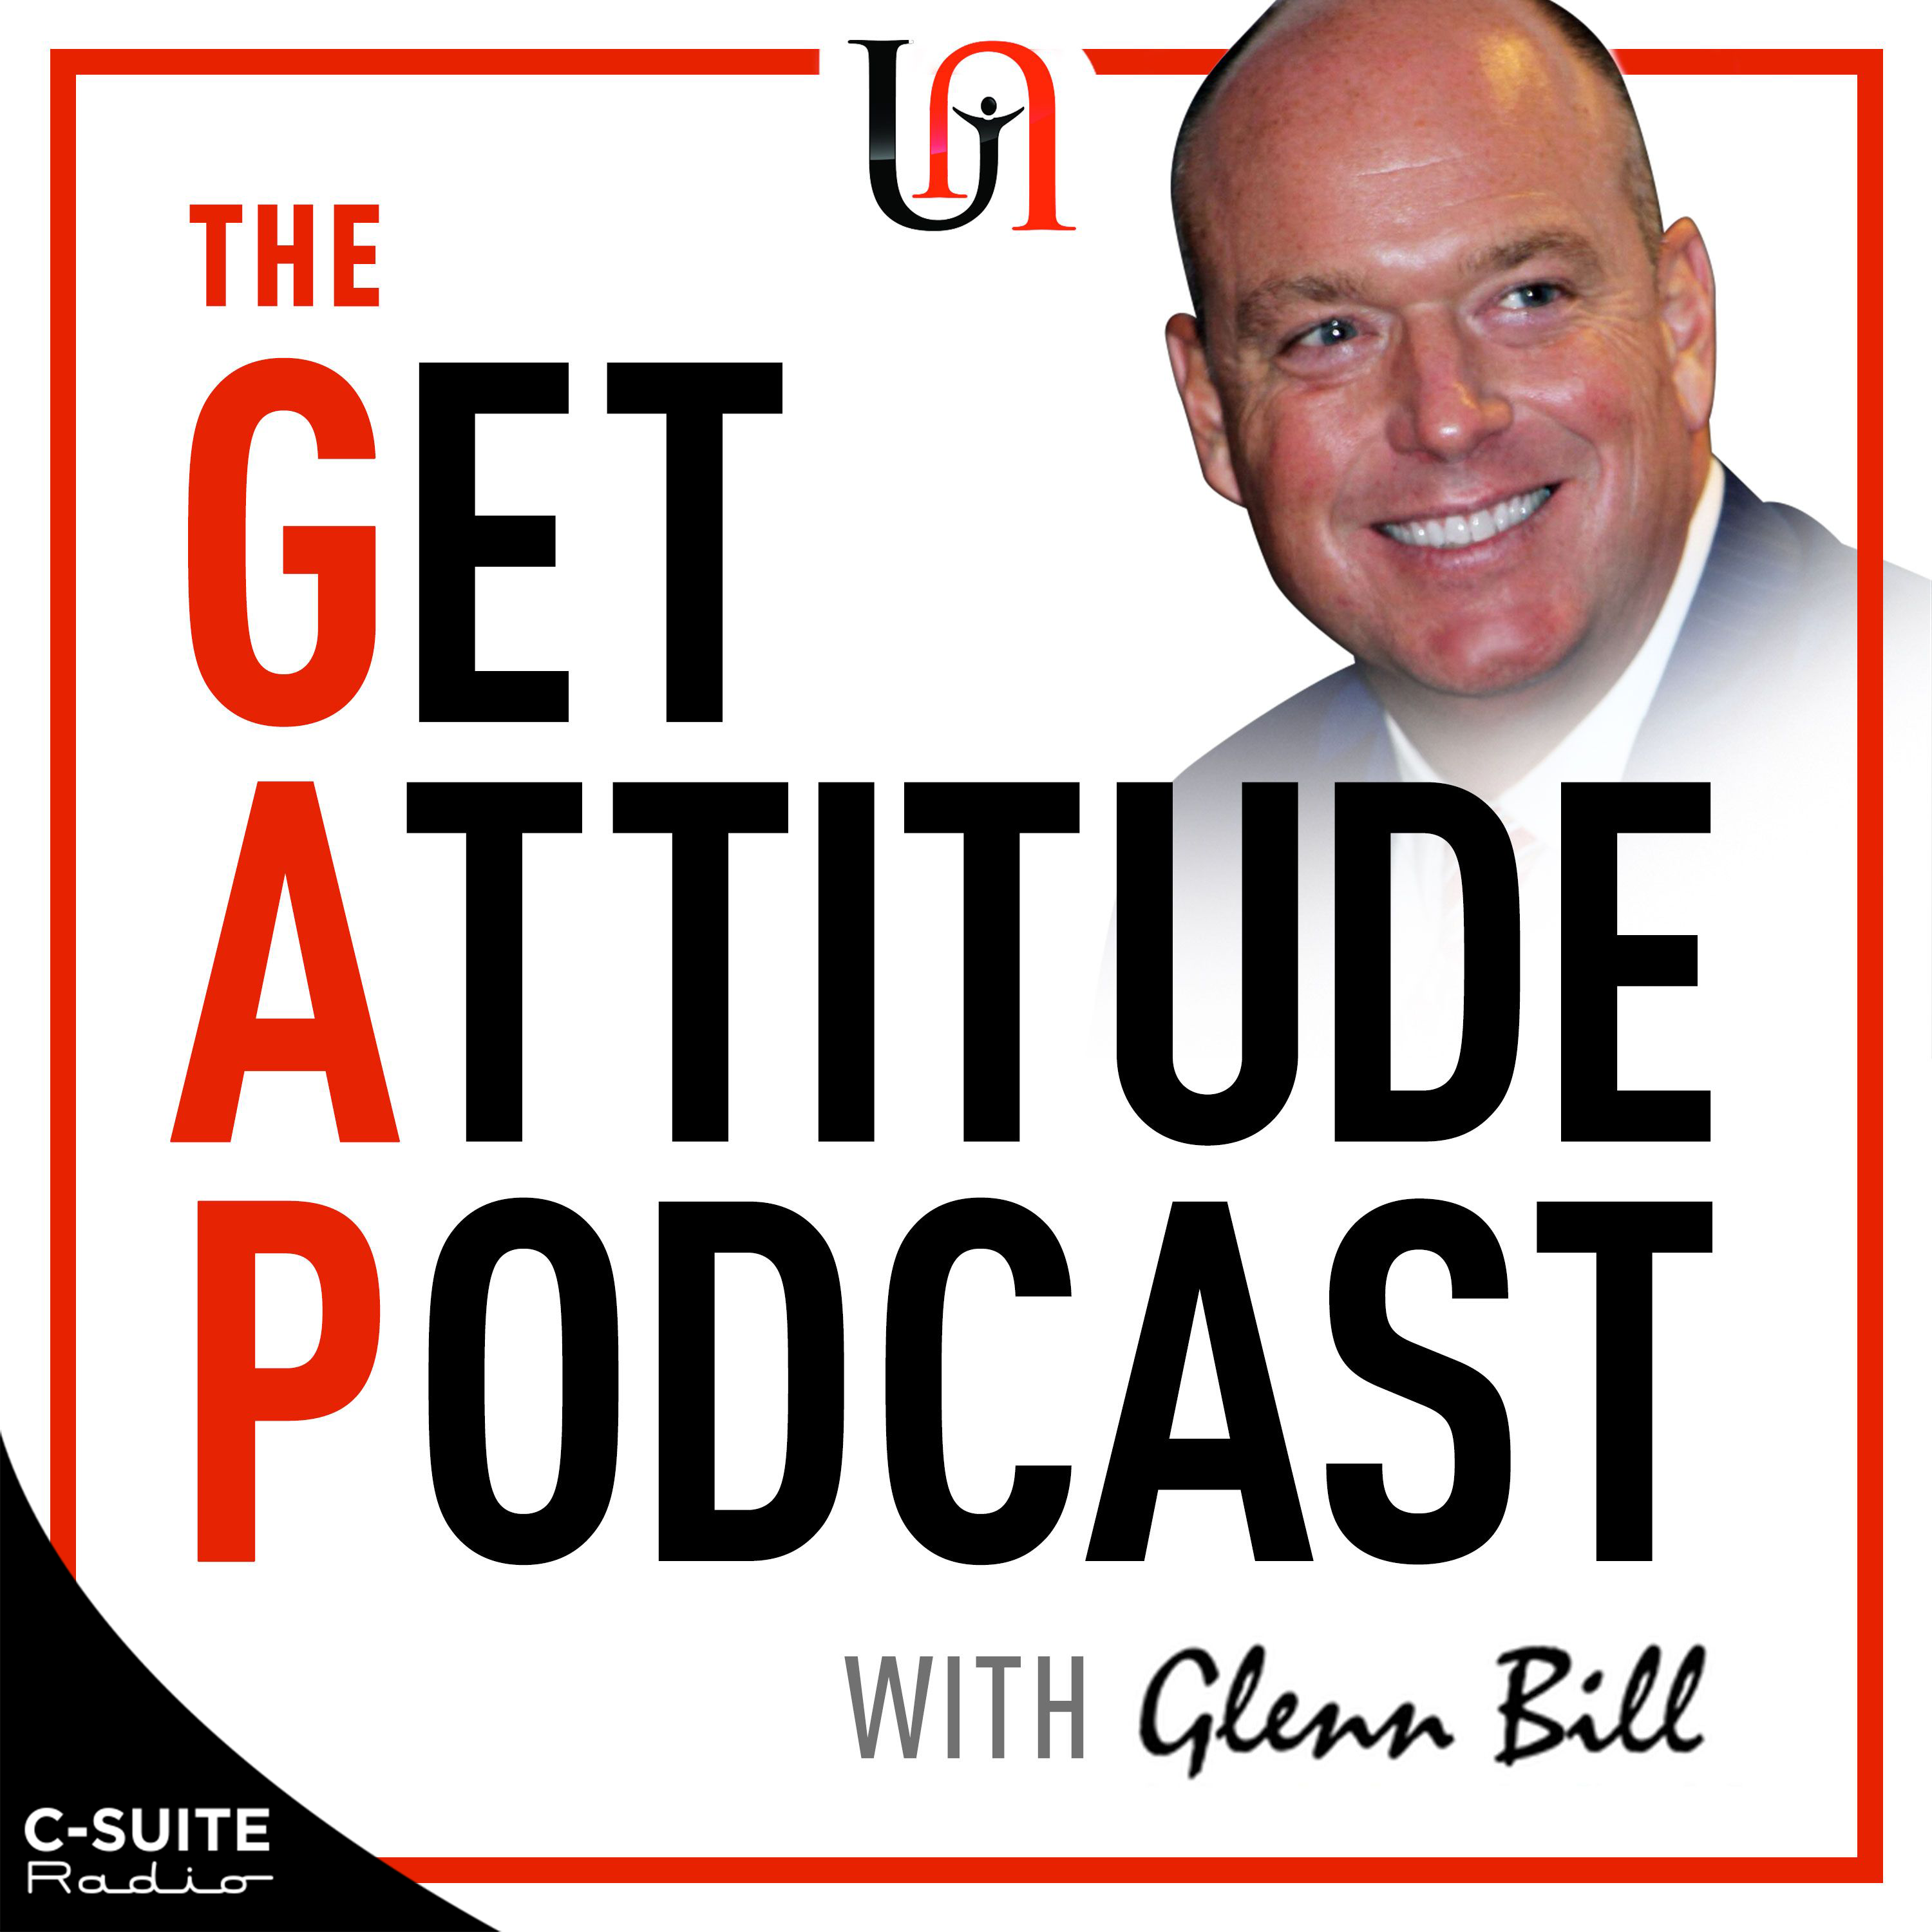 Get Attitude Podcast with Glenn Bill